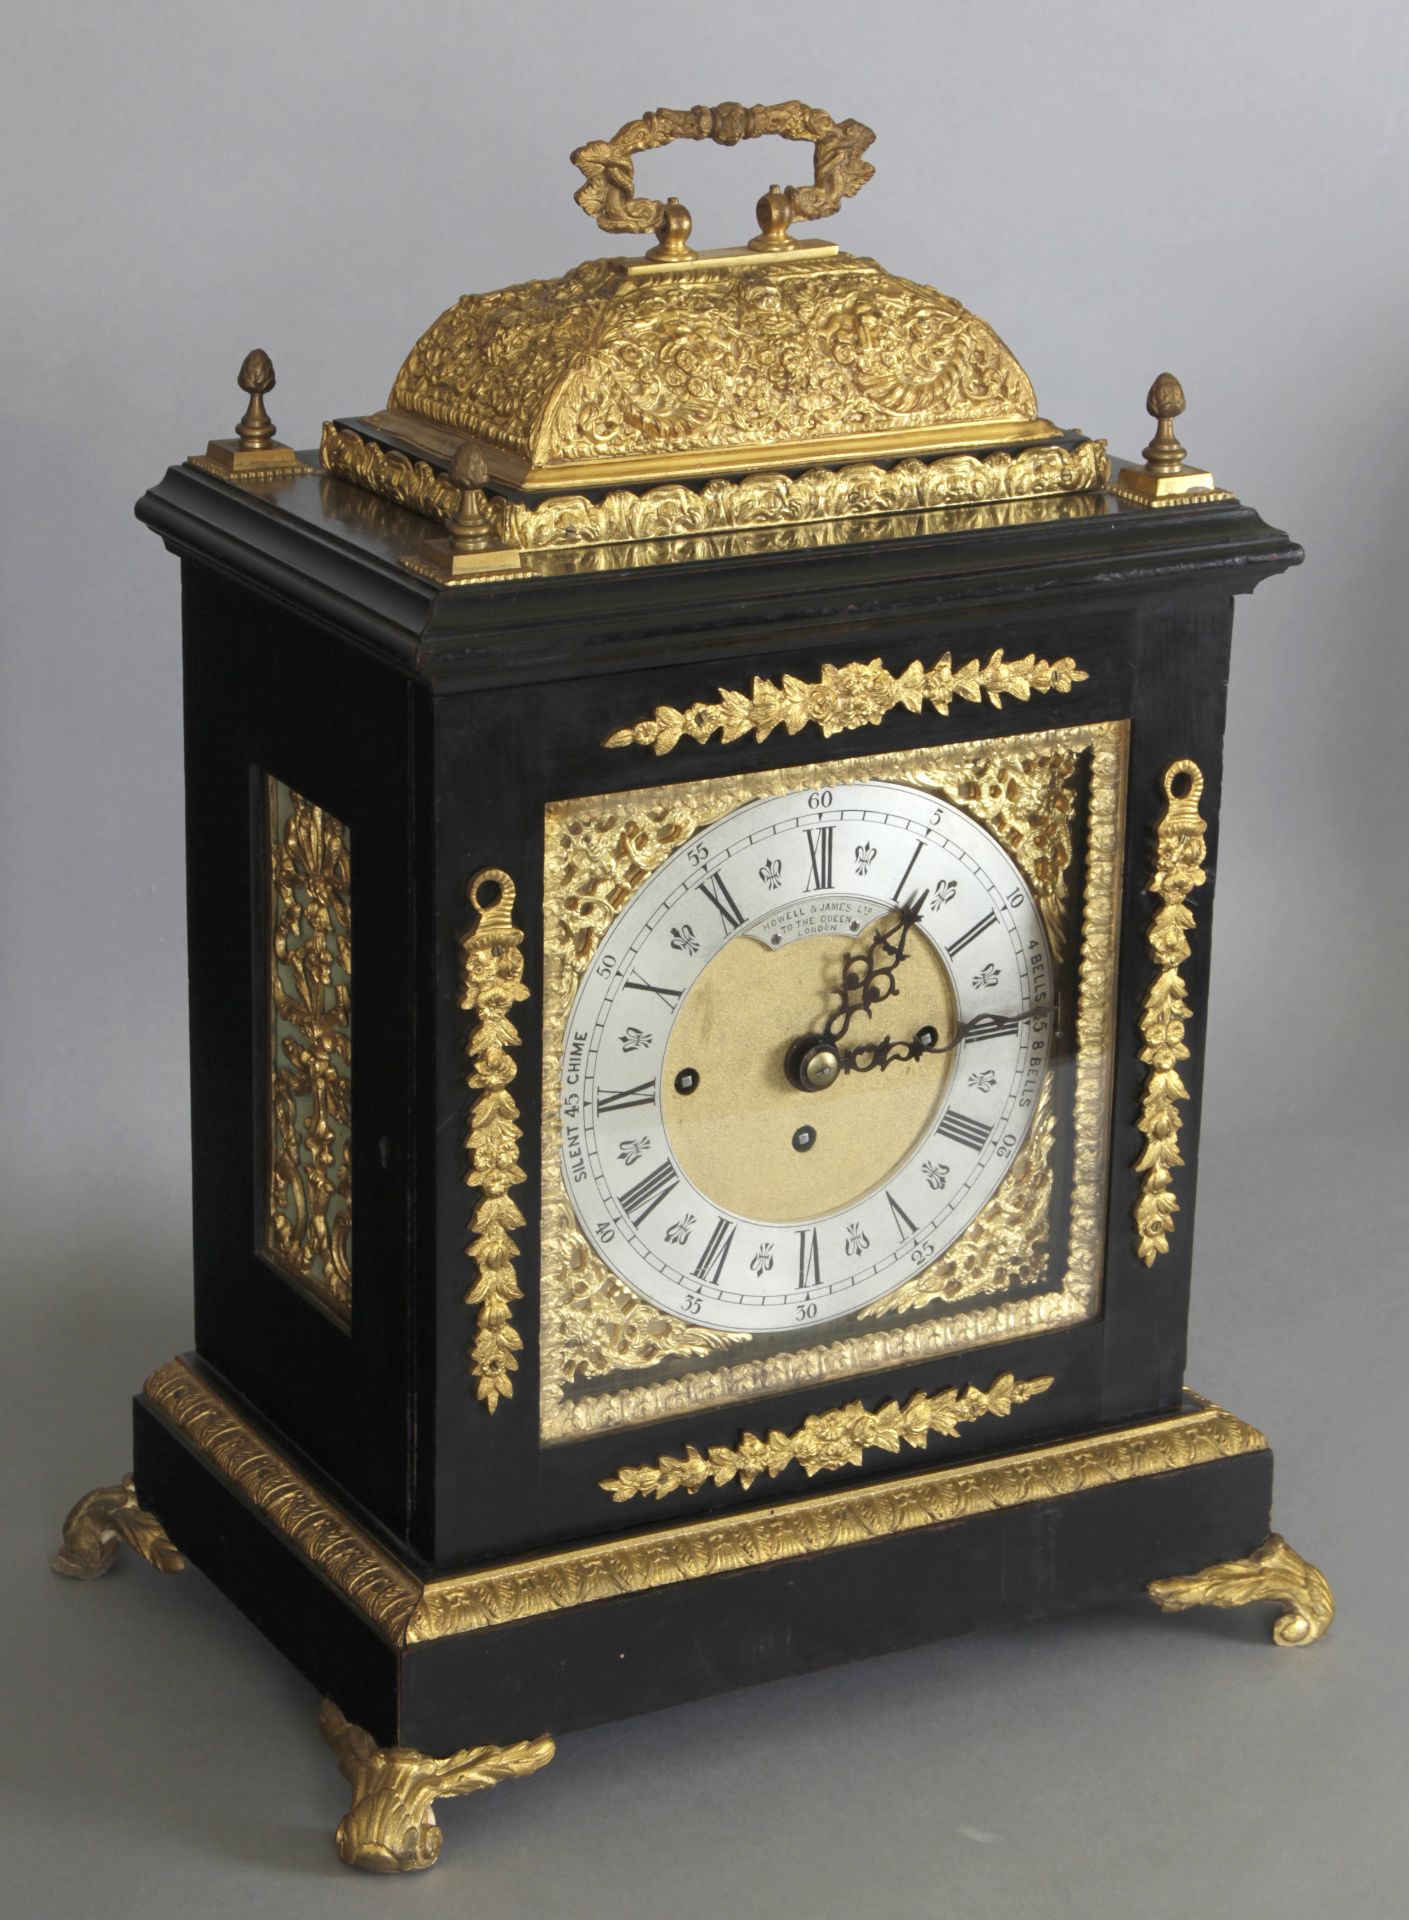 Bracket-Clock mit Carillon, England, Mitte 20. Jh., Howell & James Ltd., London - Image 2 of 4